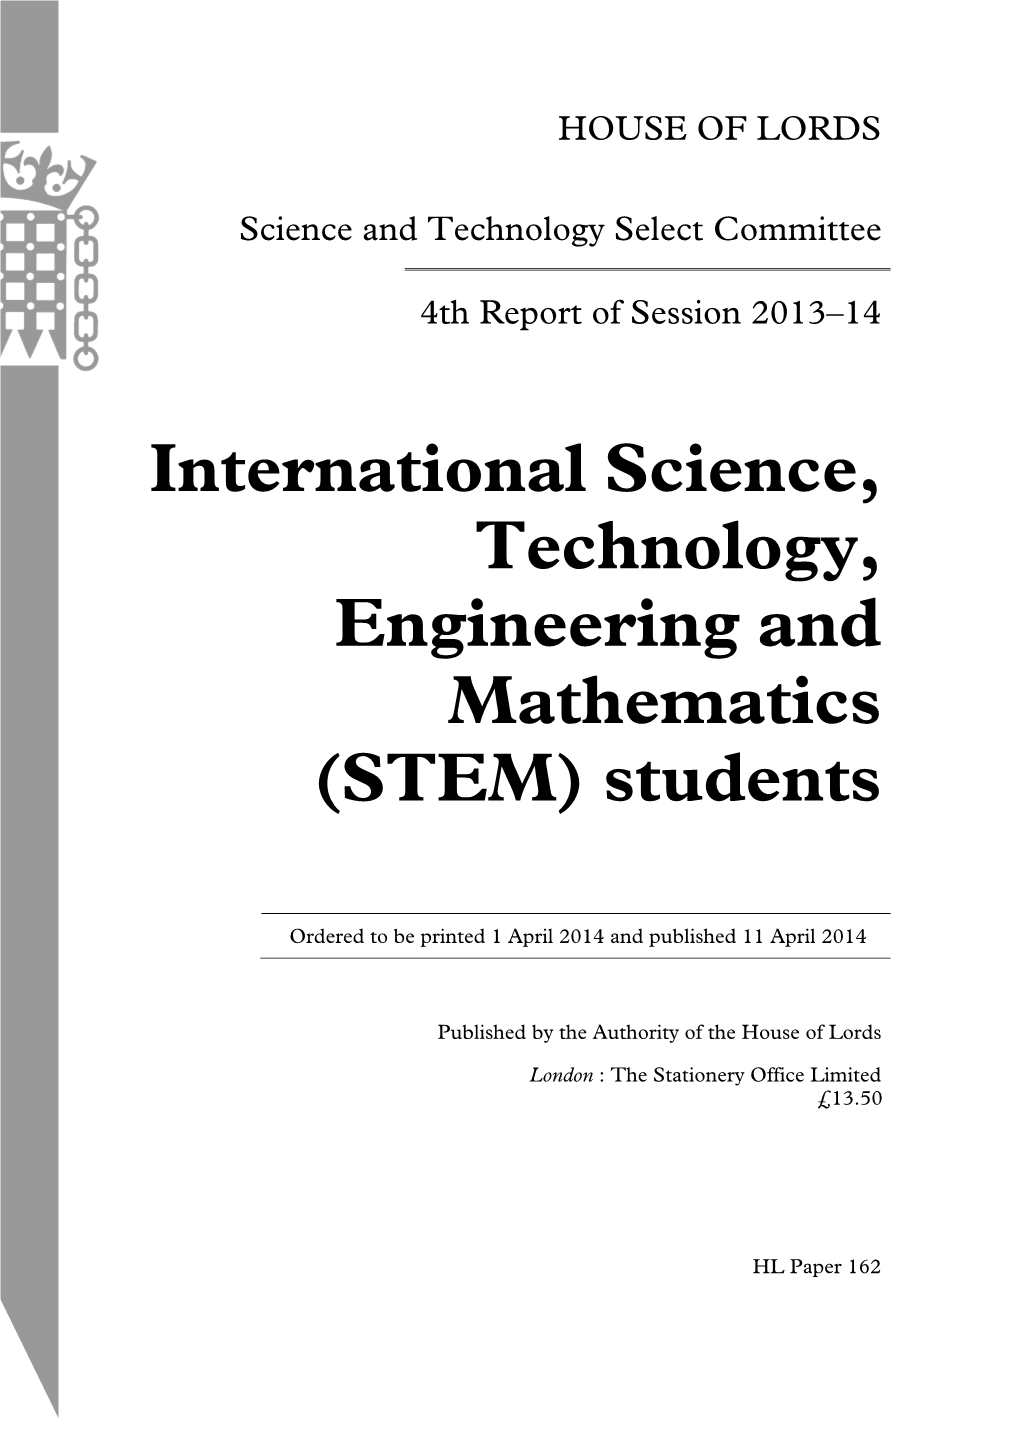 International Science, Technology, Engineering and Mathematics (STEM) Students